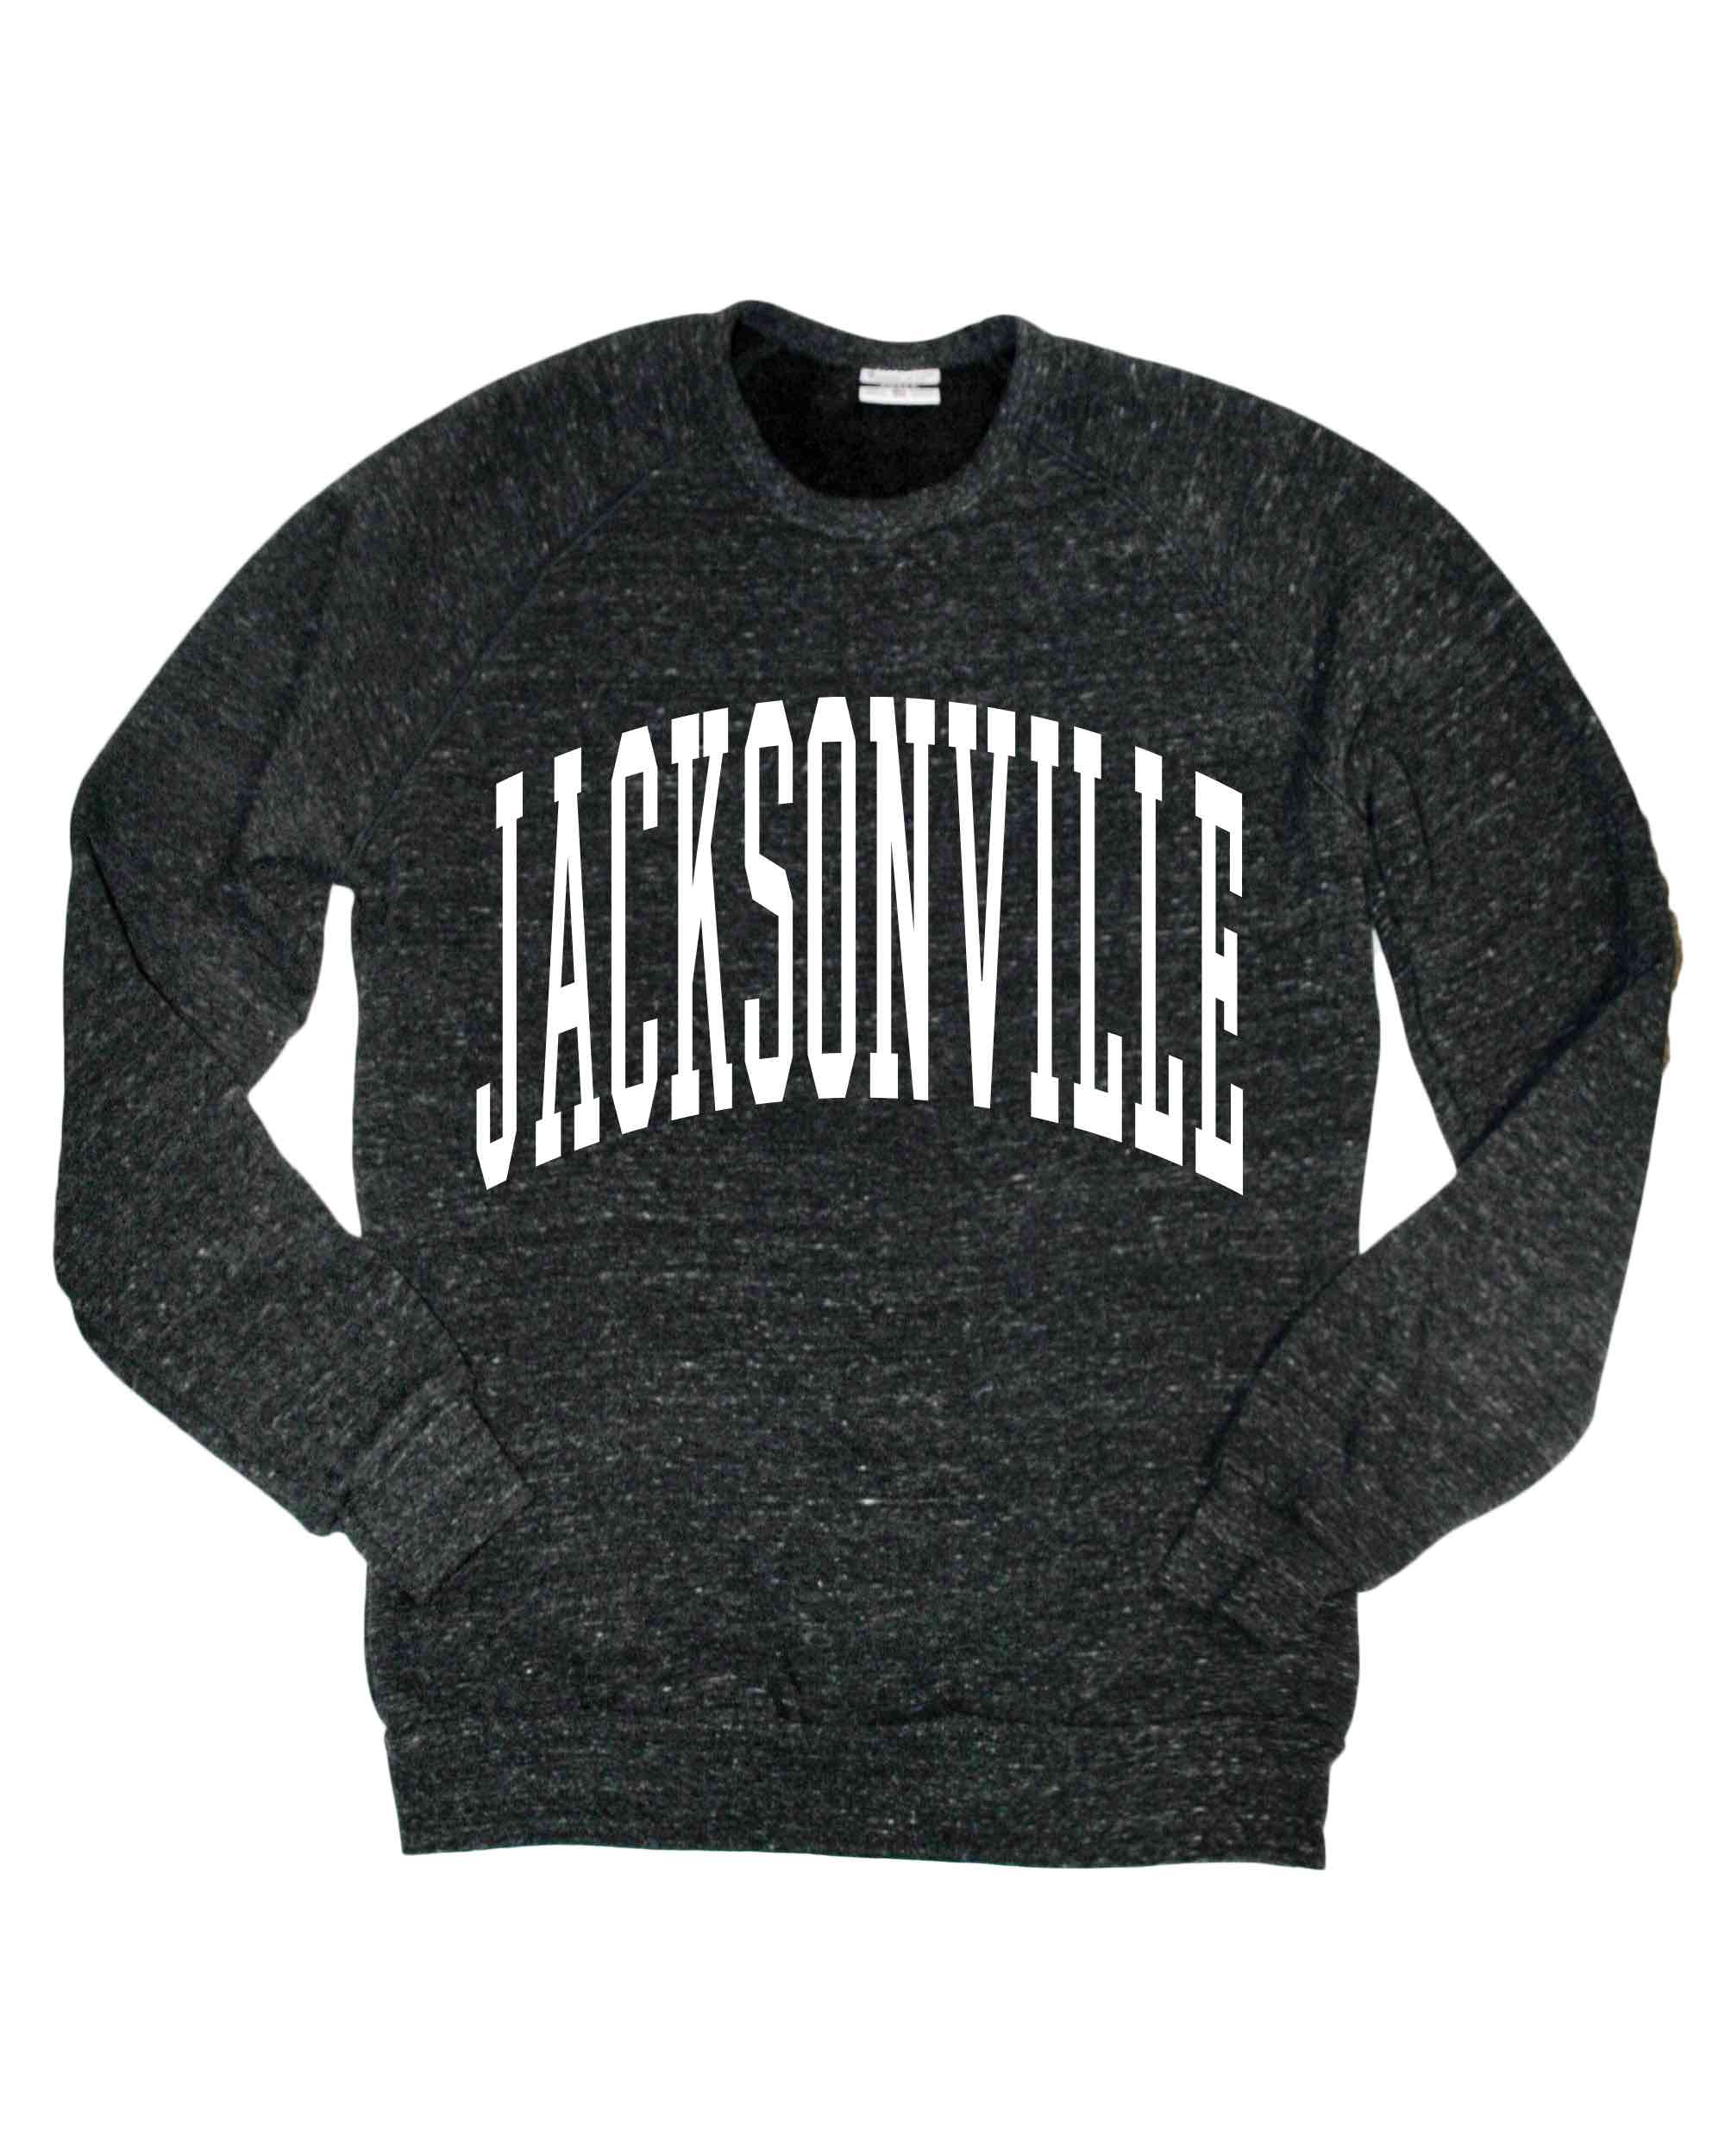 Jacksonville Oversize Black Sweatshirt